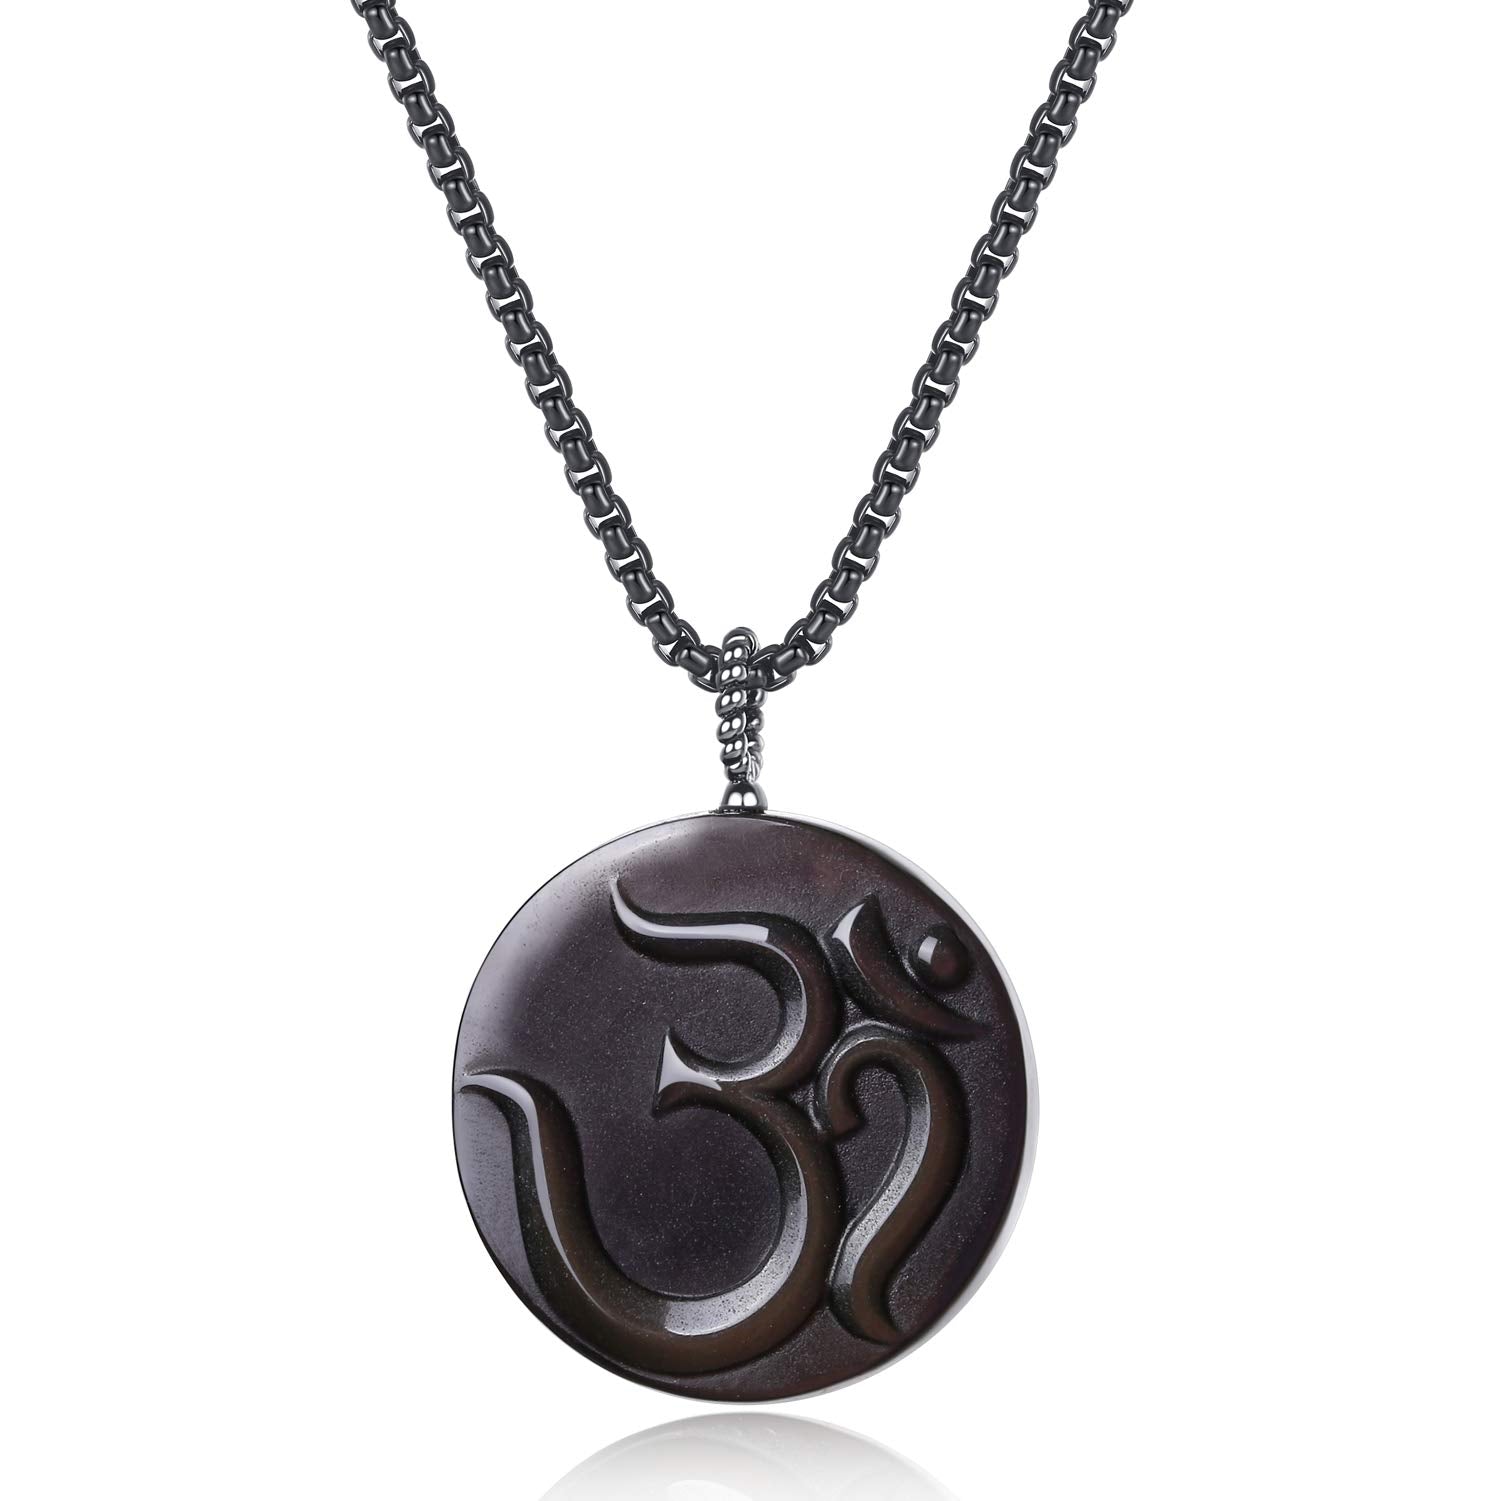 COAI OM Black Obsidian Stone Prayer Pendant Necklace